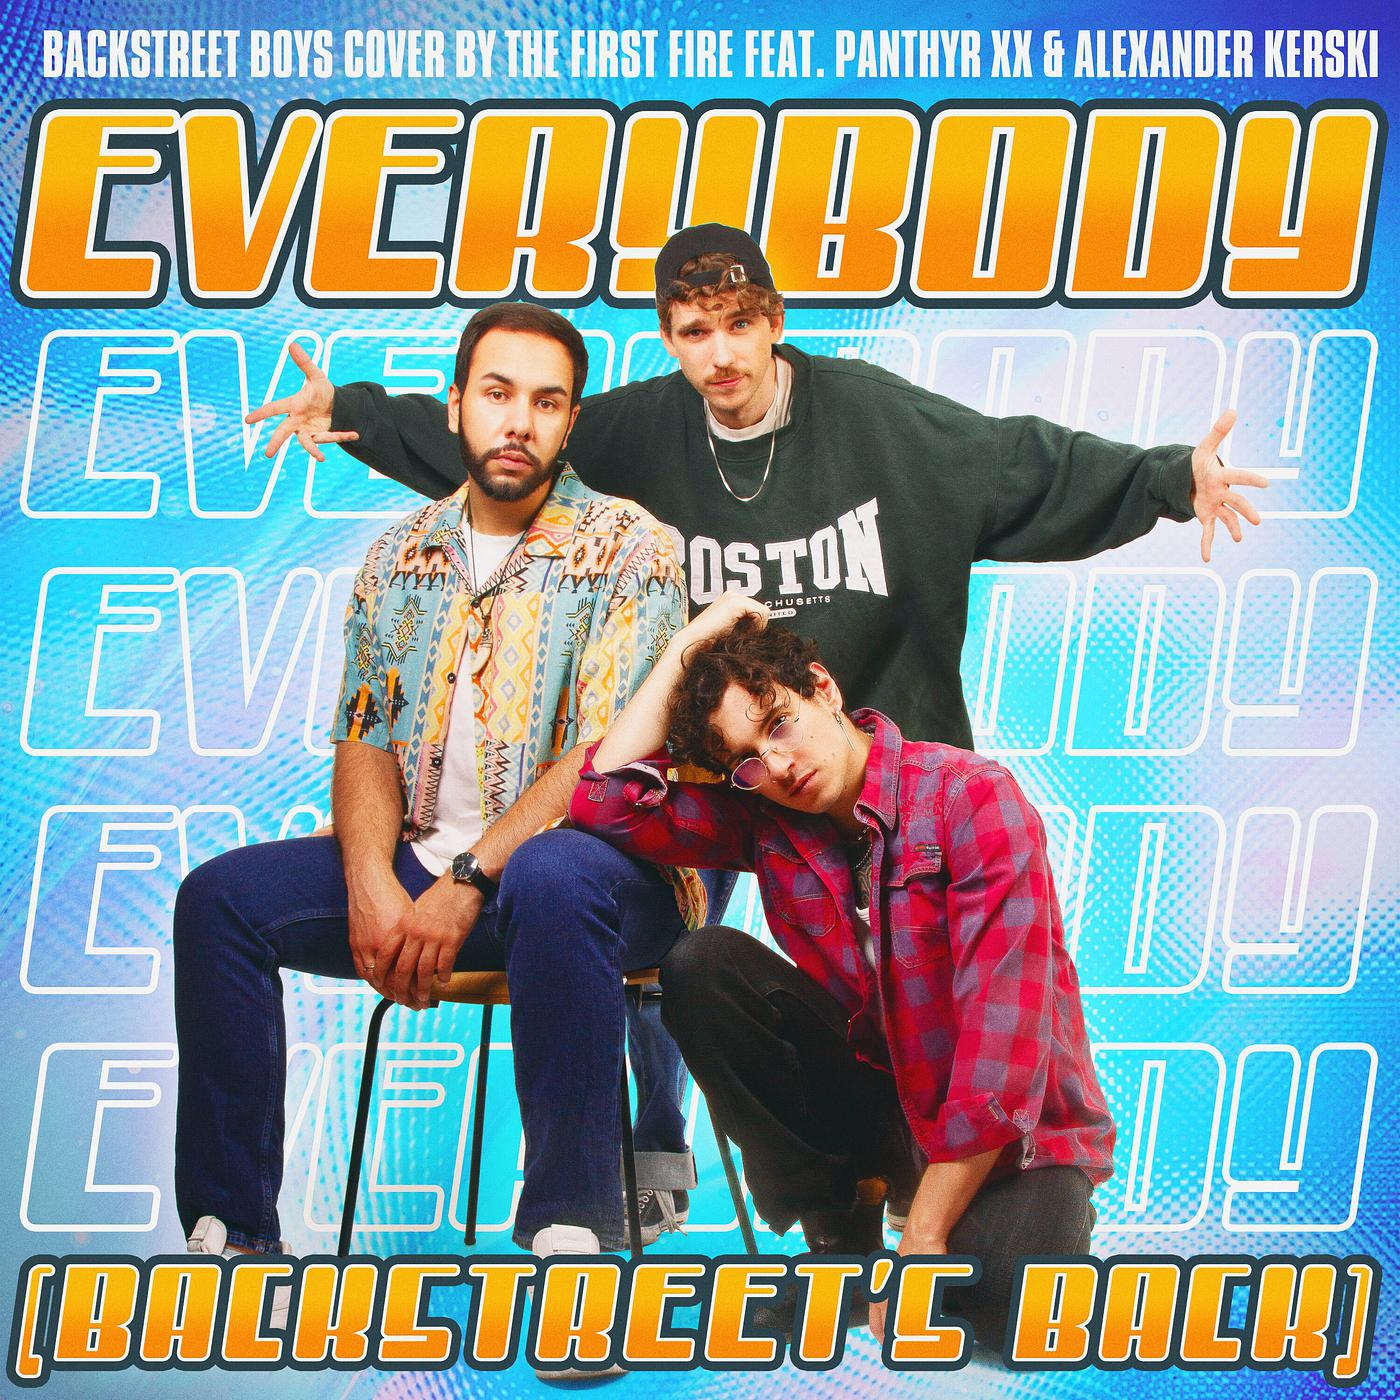 Постер альбома Everybody (Backstreet's Back)